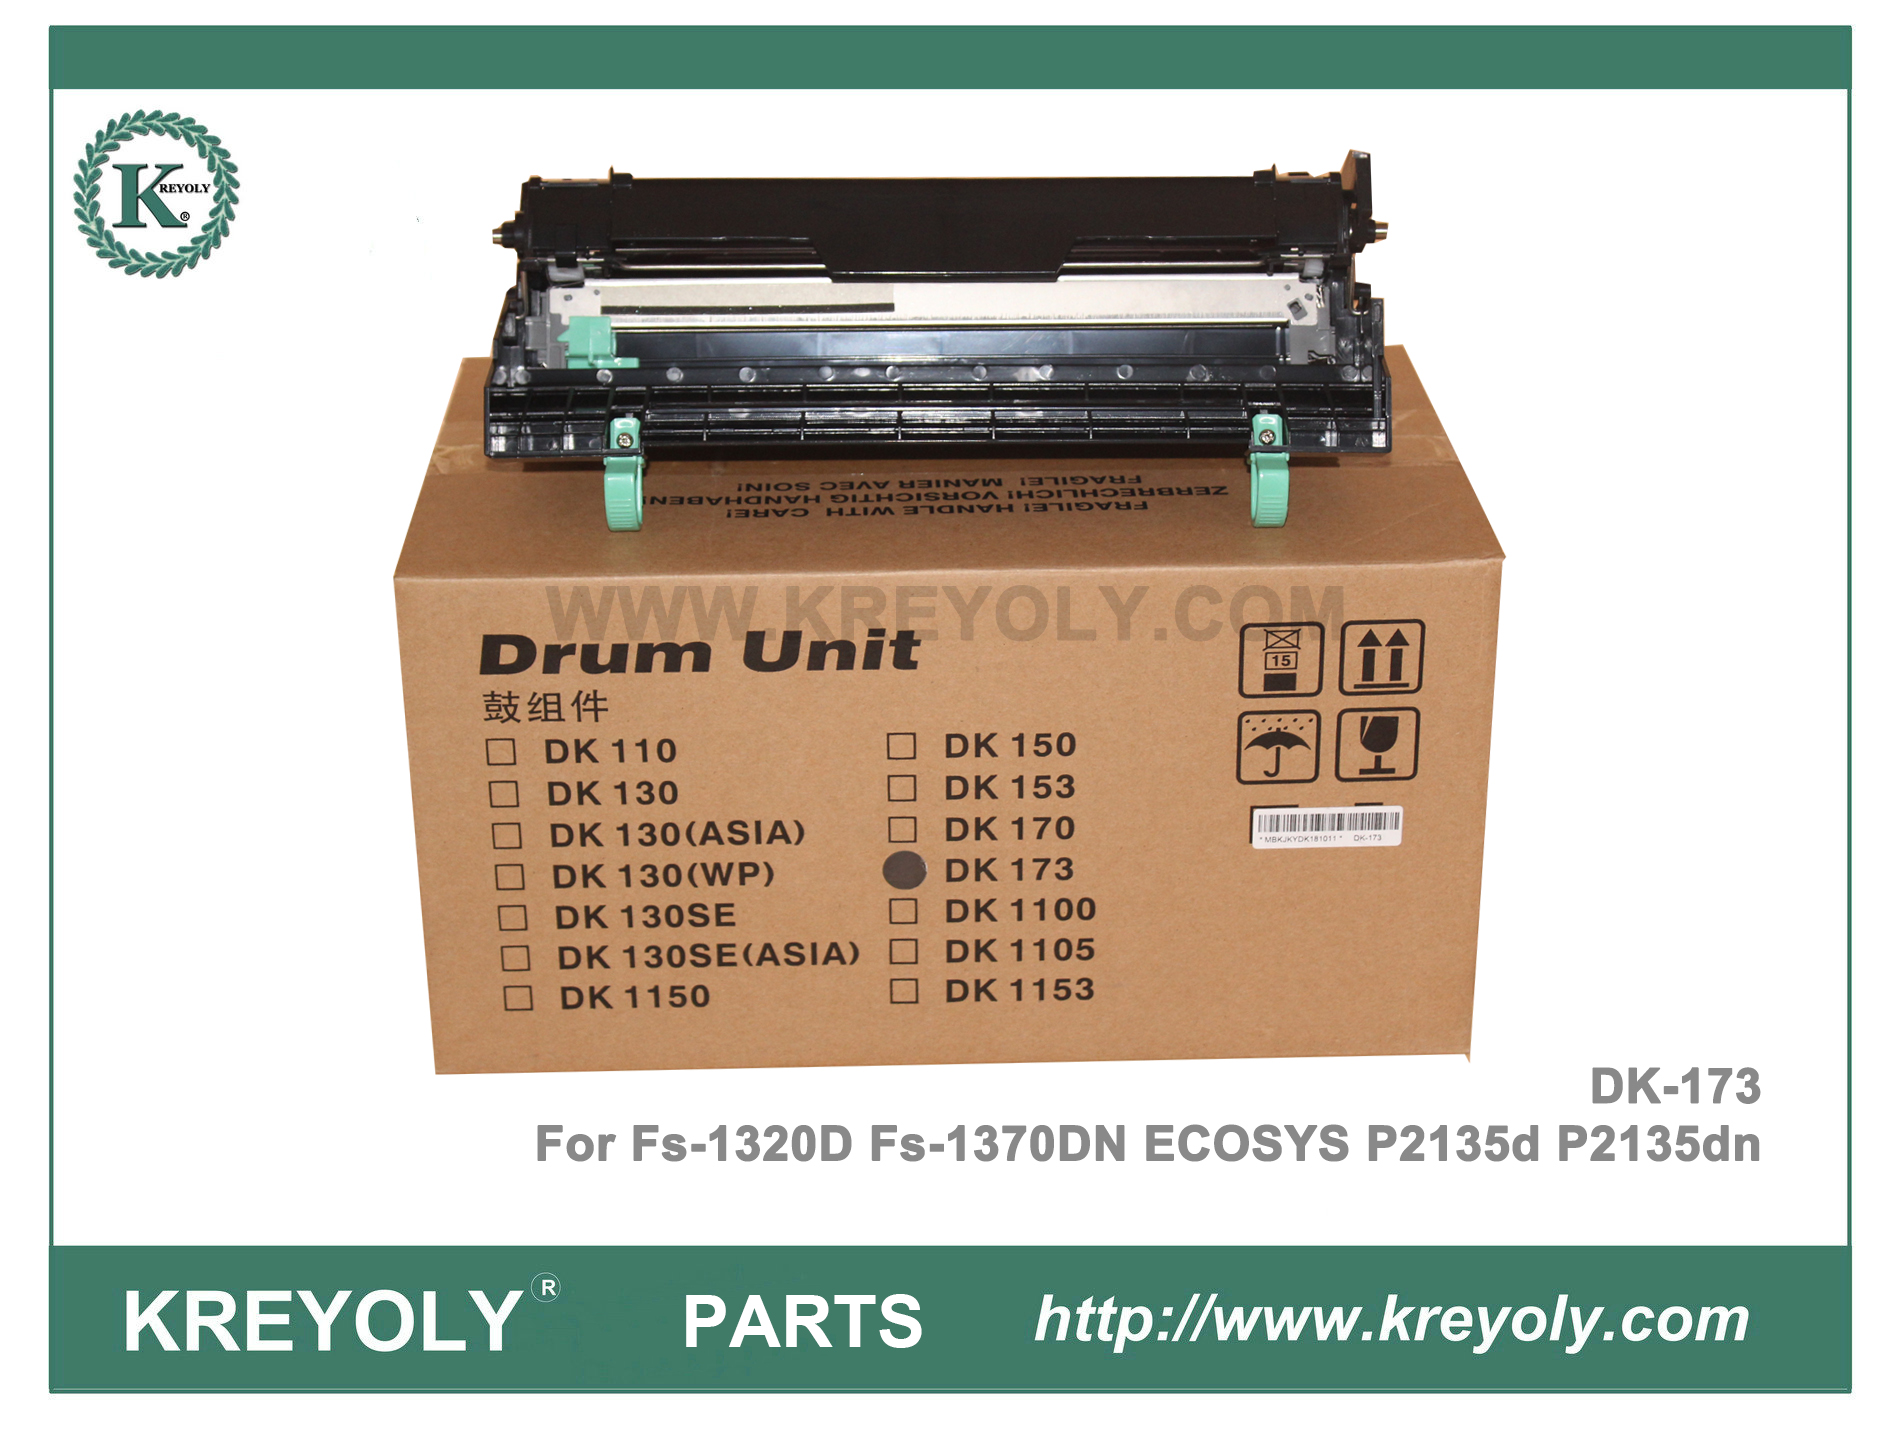 Song-s Compatible Kyocera DR-173 Toner Cartridge Applicable to Kyocera FS-1320D 1370DN P2135dn Copier Drum Holder Black